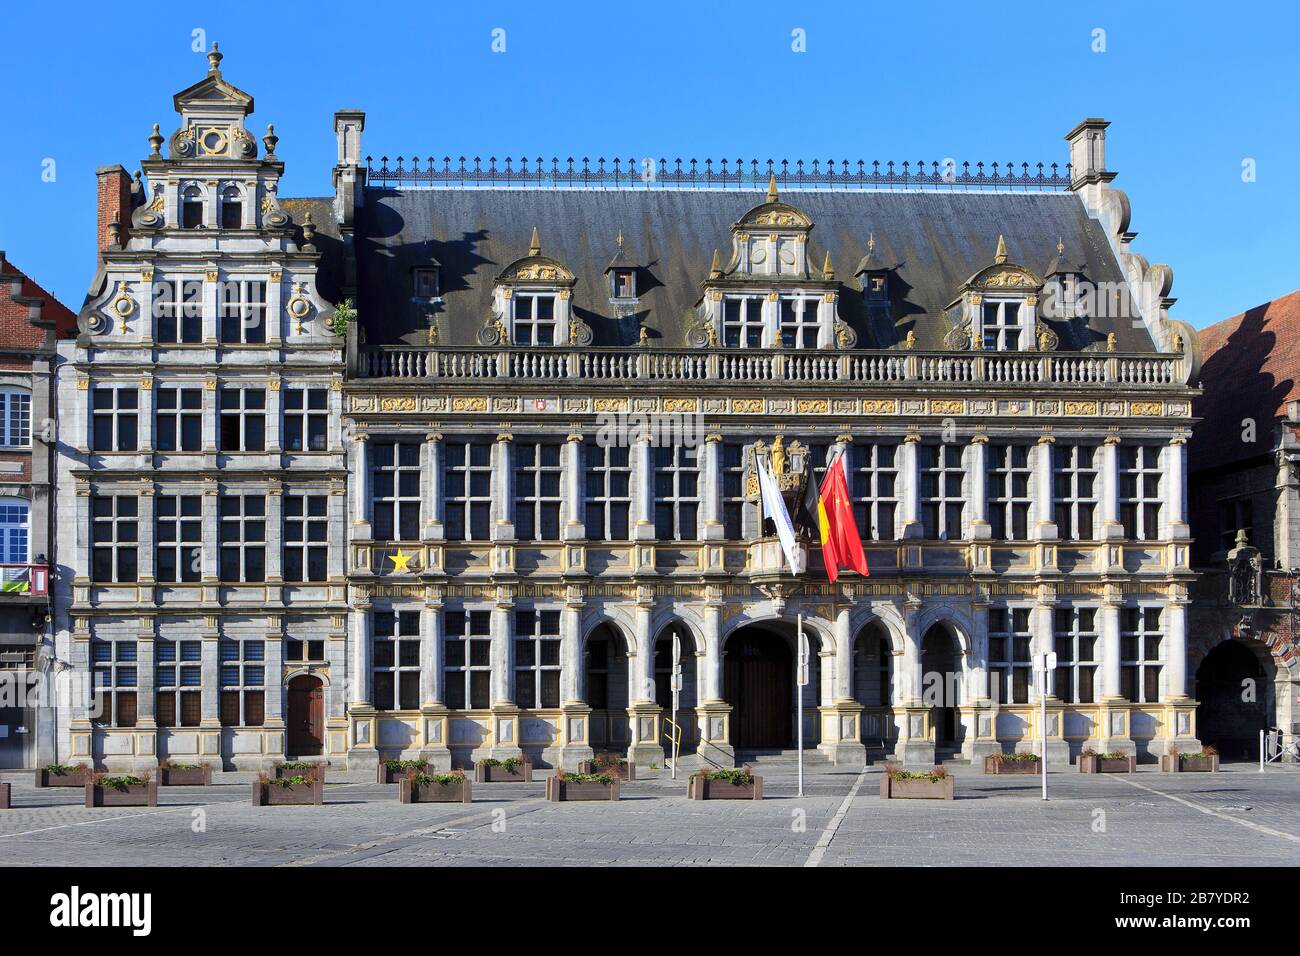 Facade of the beautiful Cloth Hall (1610) of Tournai, Belgium Stock Photo